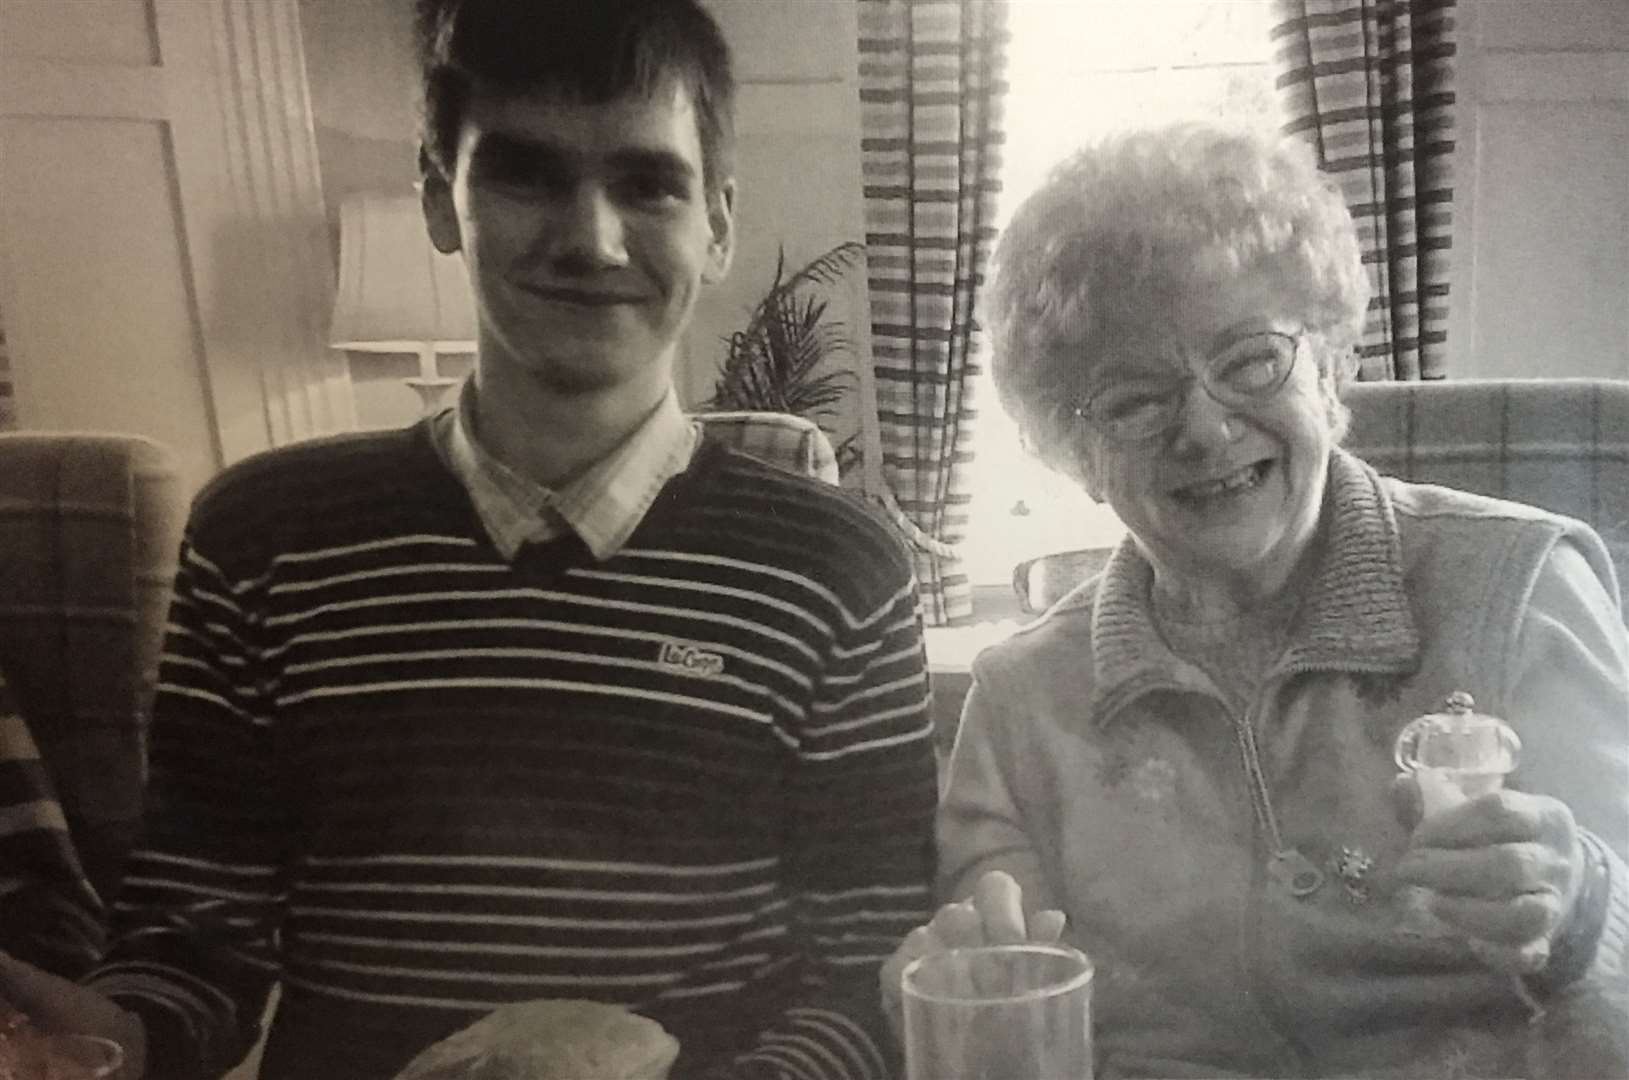 Daniel Whitworth with his grandmother Barbara